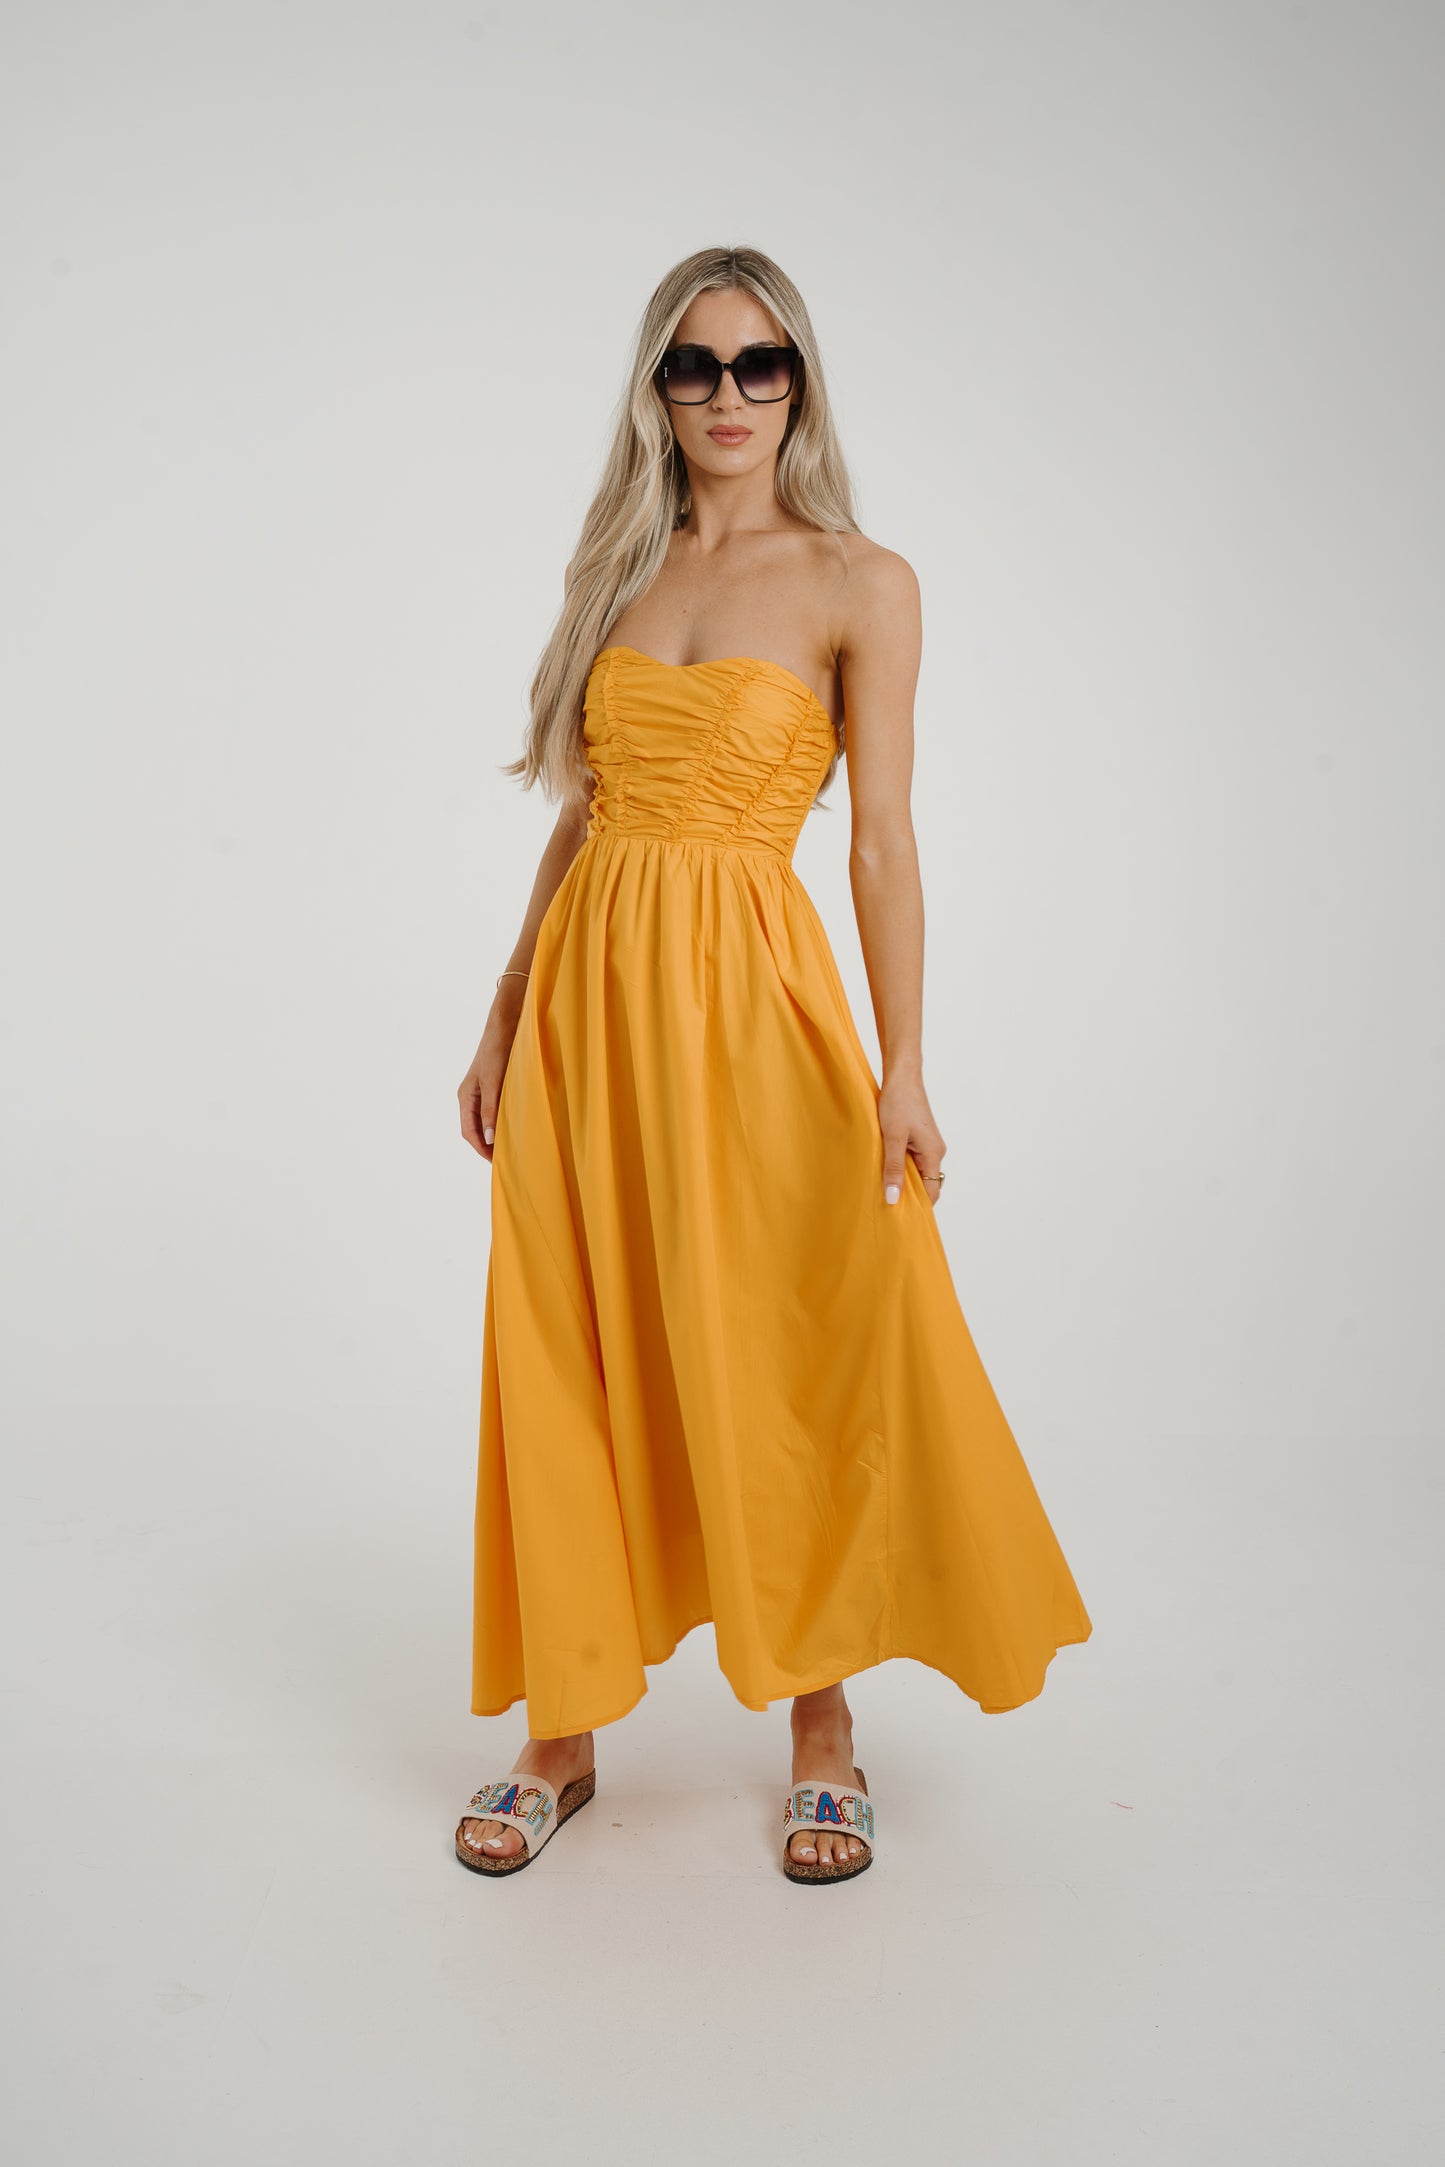 Caitlyn Corset Style Dress In Orange